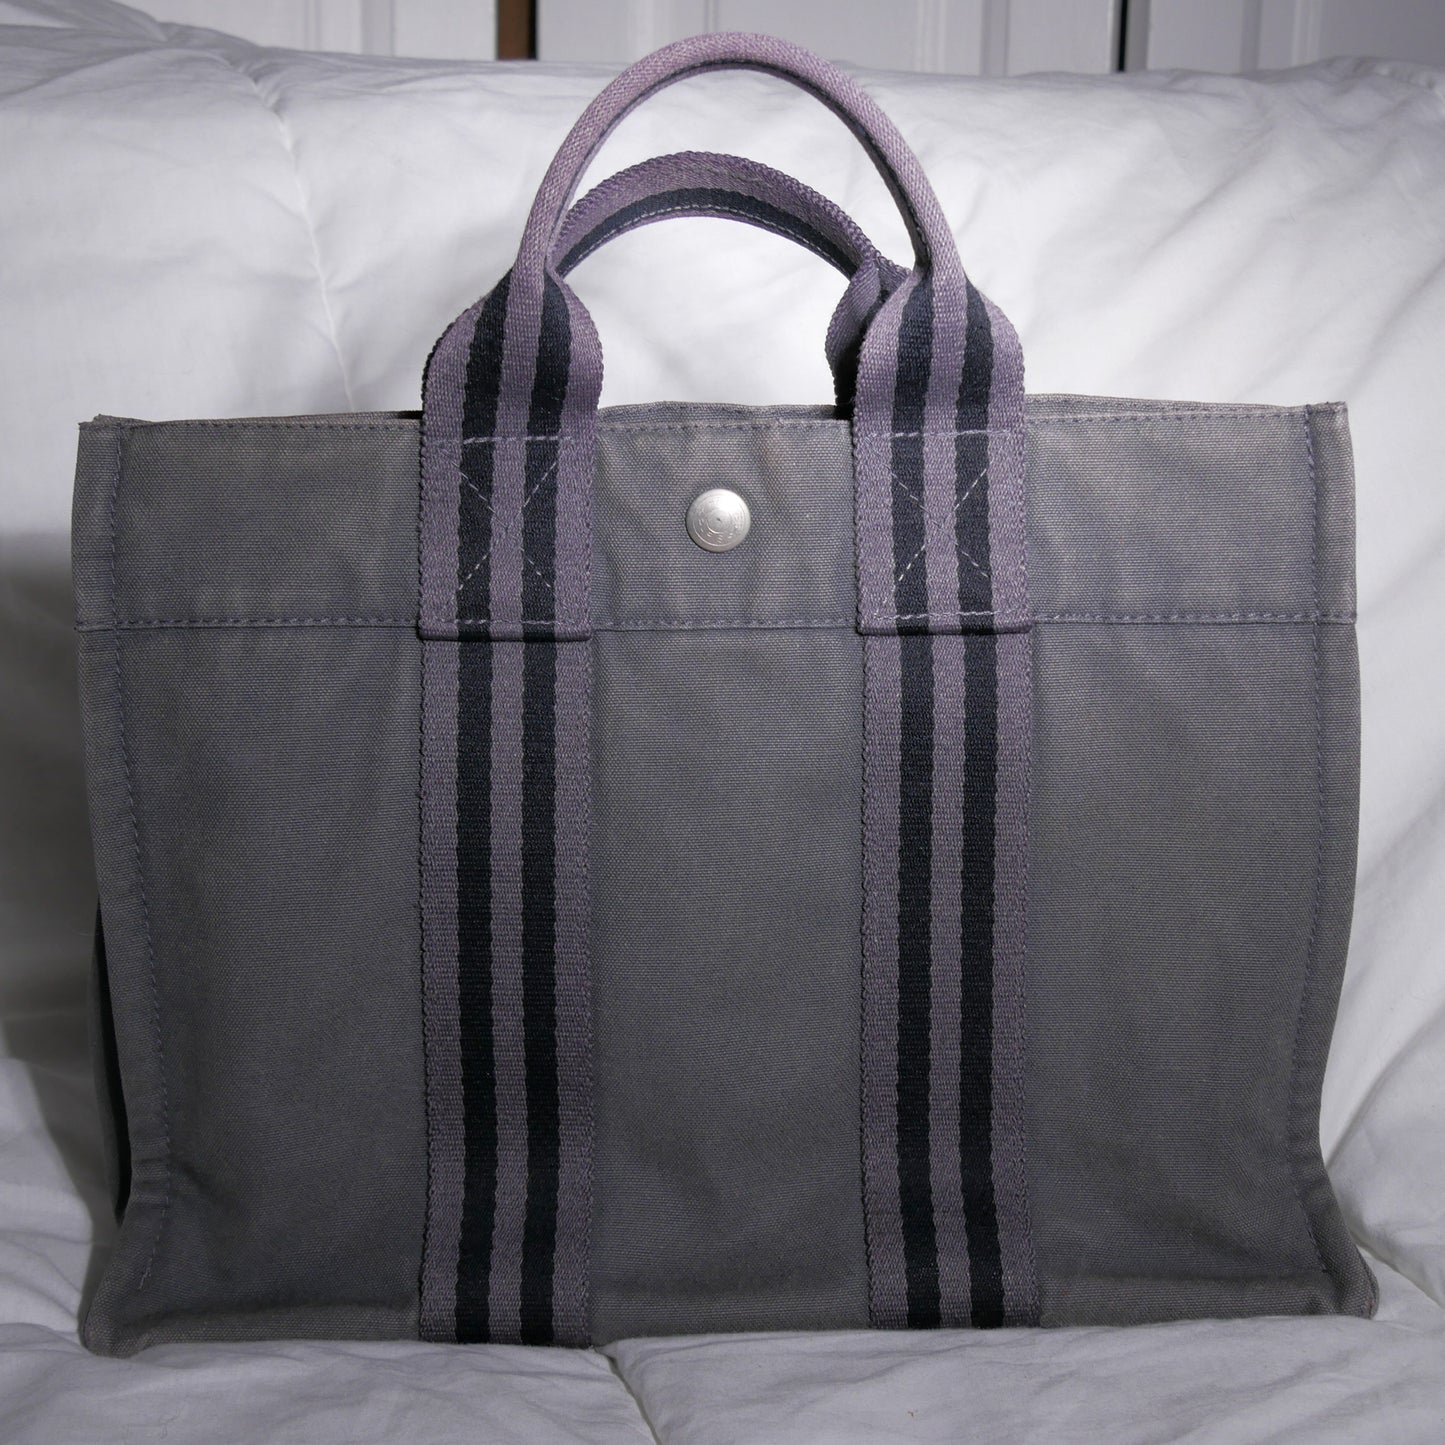 Hermès - Small Grey "Toto" Bag